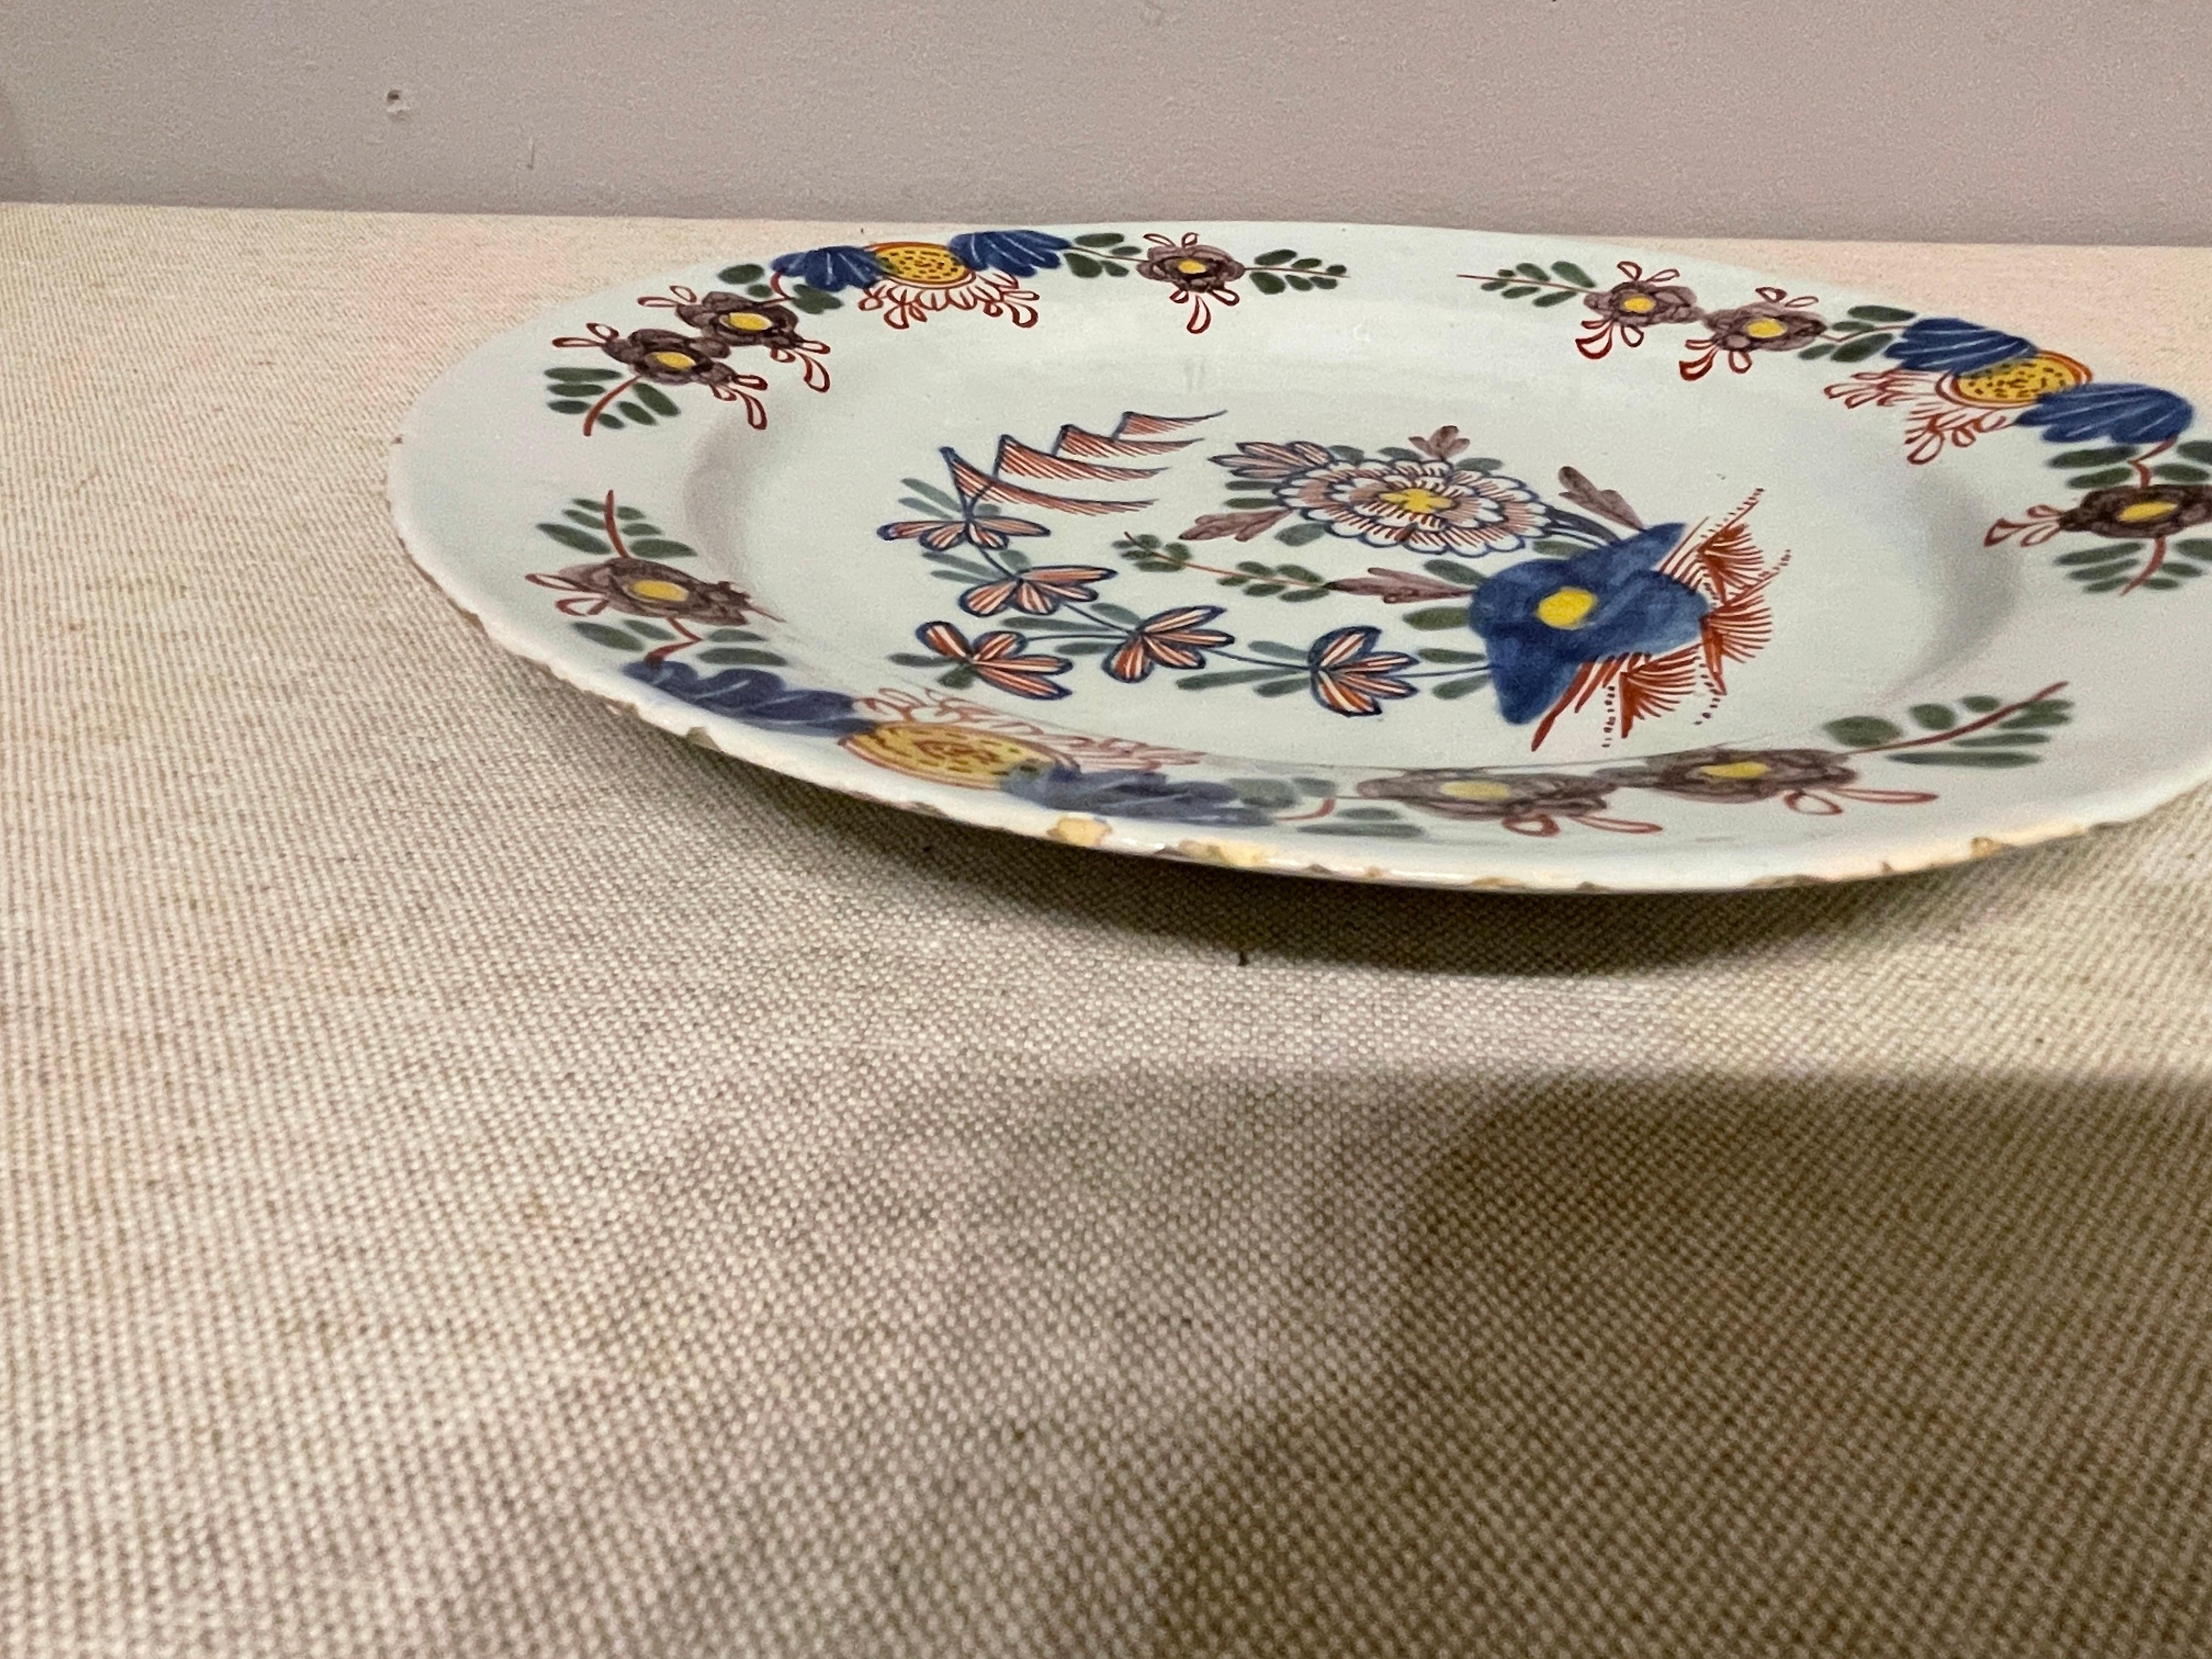 18th Century English Delft Tin Glaze Faience Polychrome Plate For Sale 2